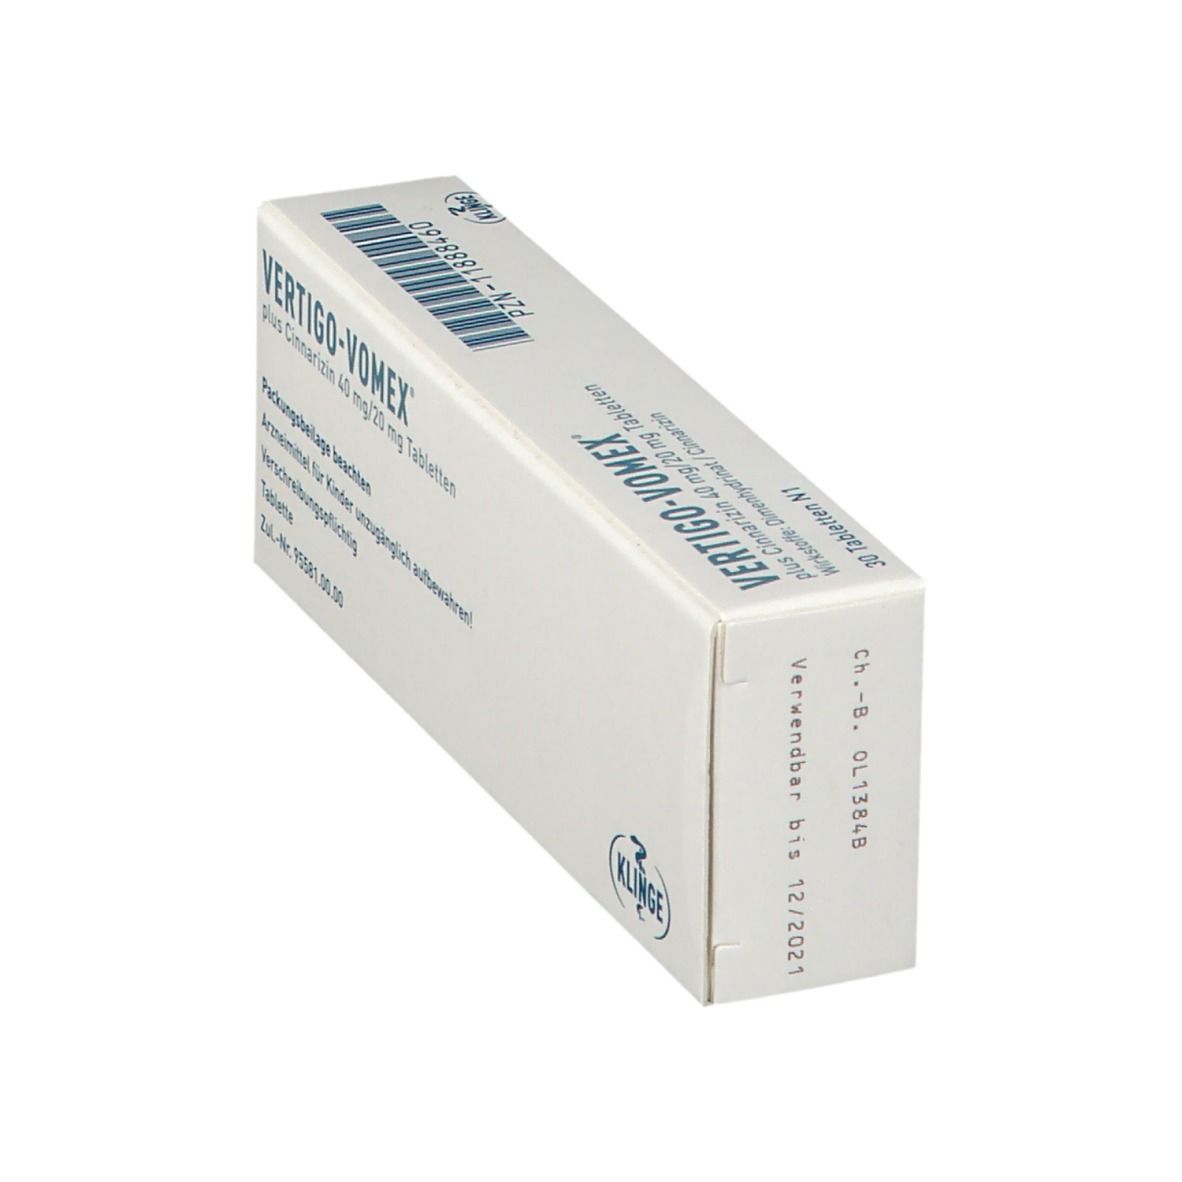 VERTIGO-VOMEX® plus Cinnarizin 40 mg/20 mg